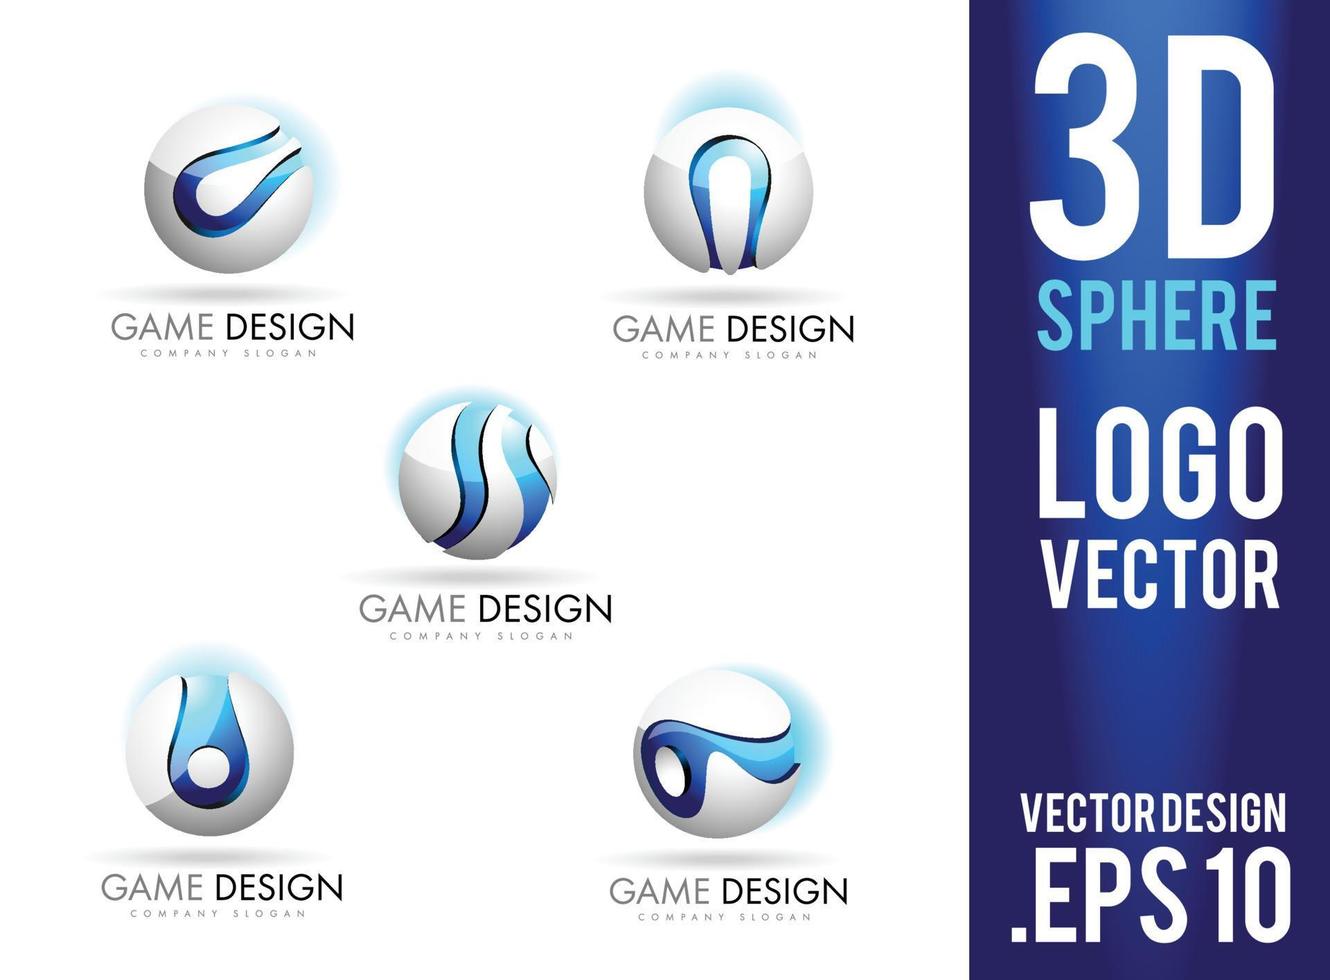 3D Sphere Logo Design Vector